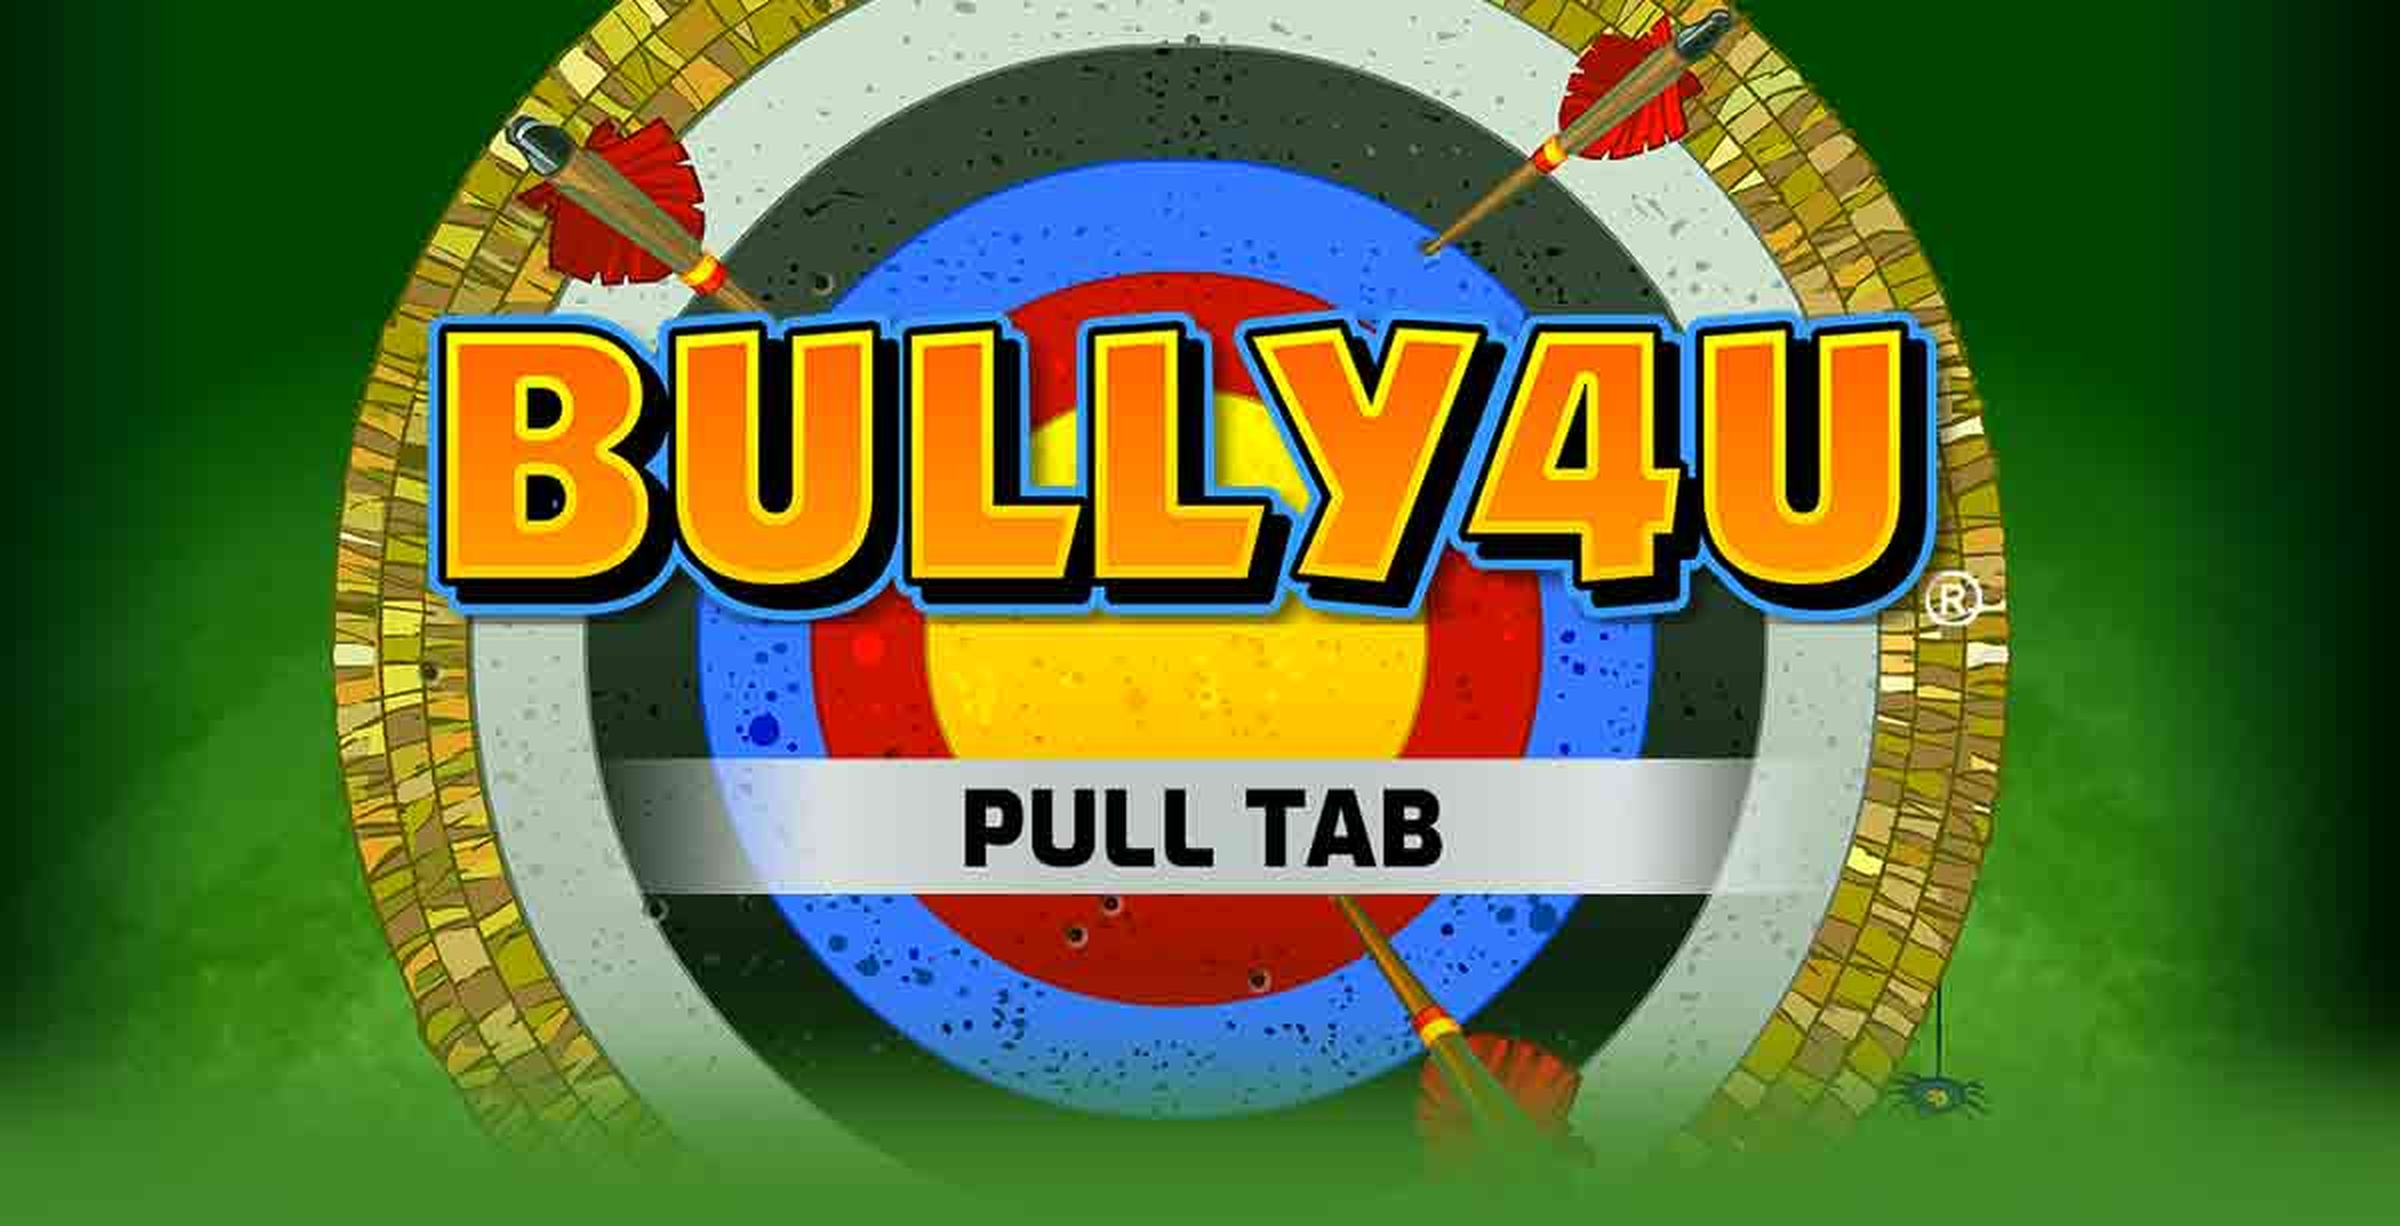 Bully4U Pull Tab demo